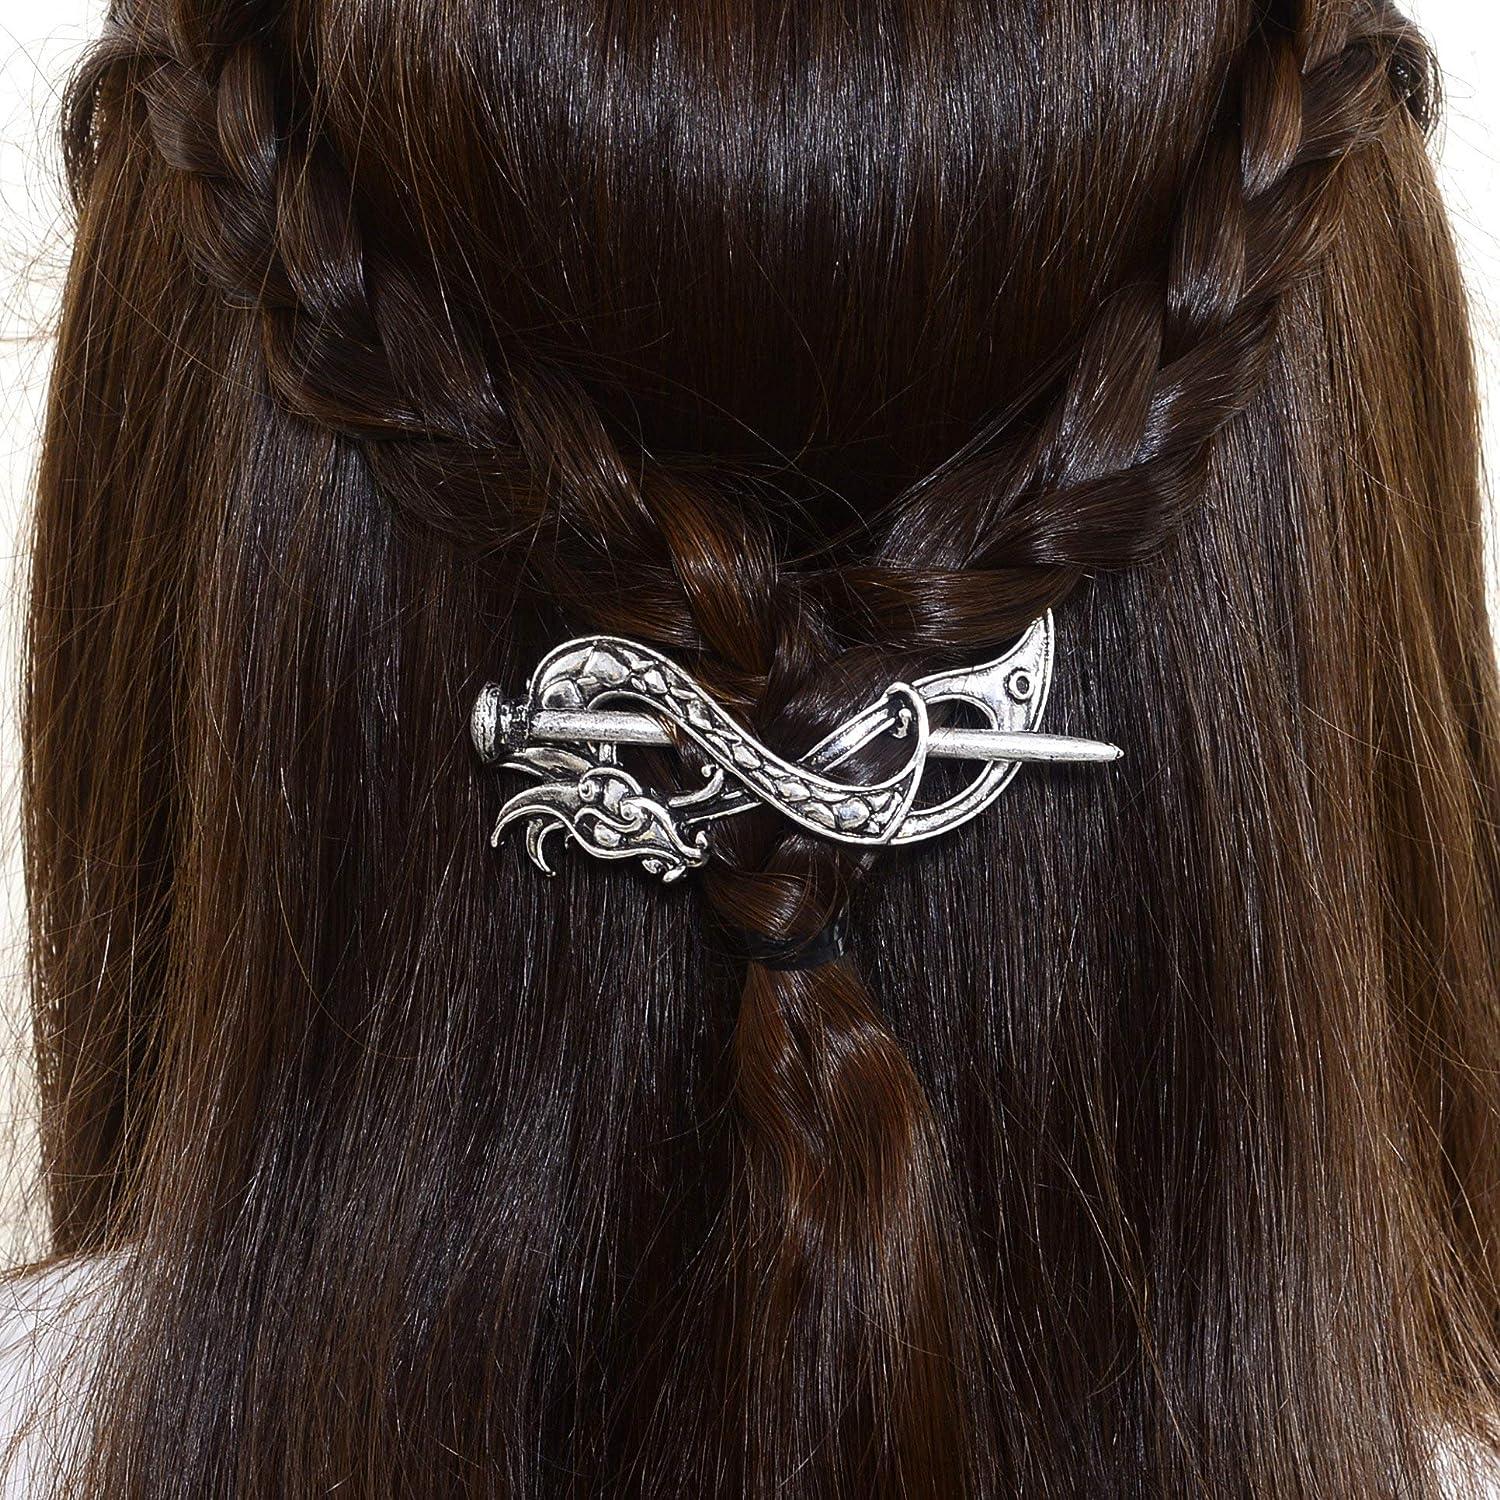 Curly Locks Jewelry - Horse Hair Designs